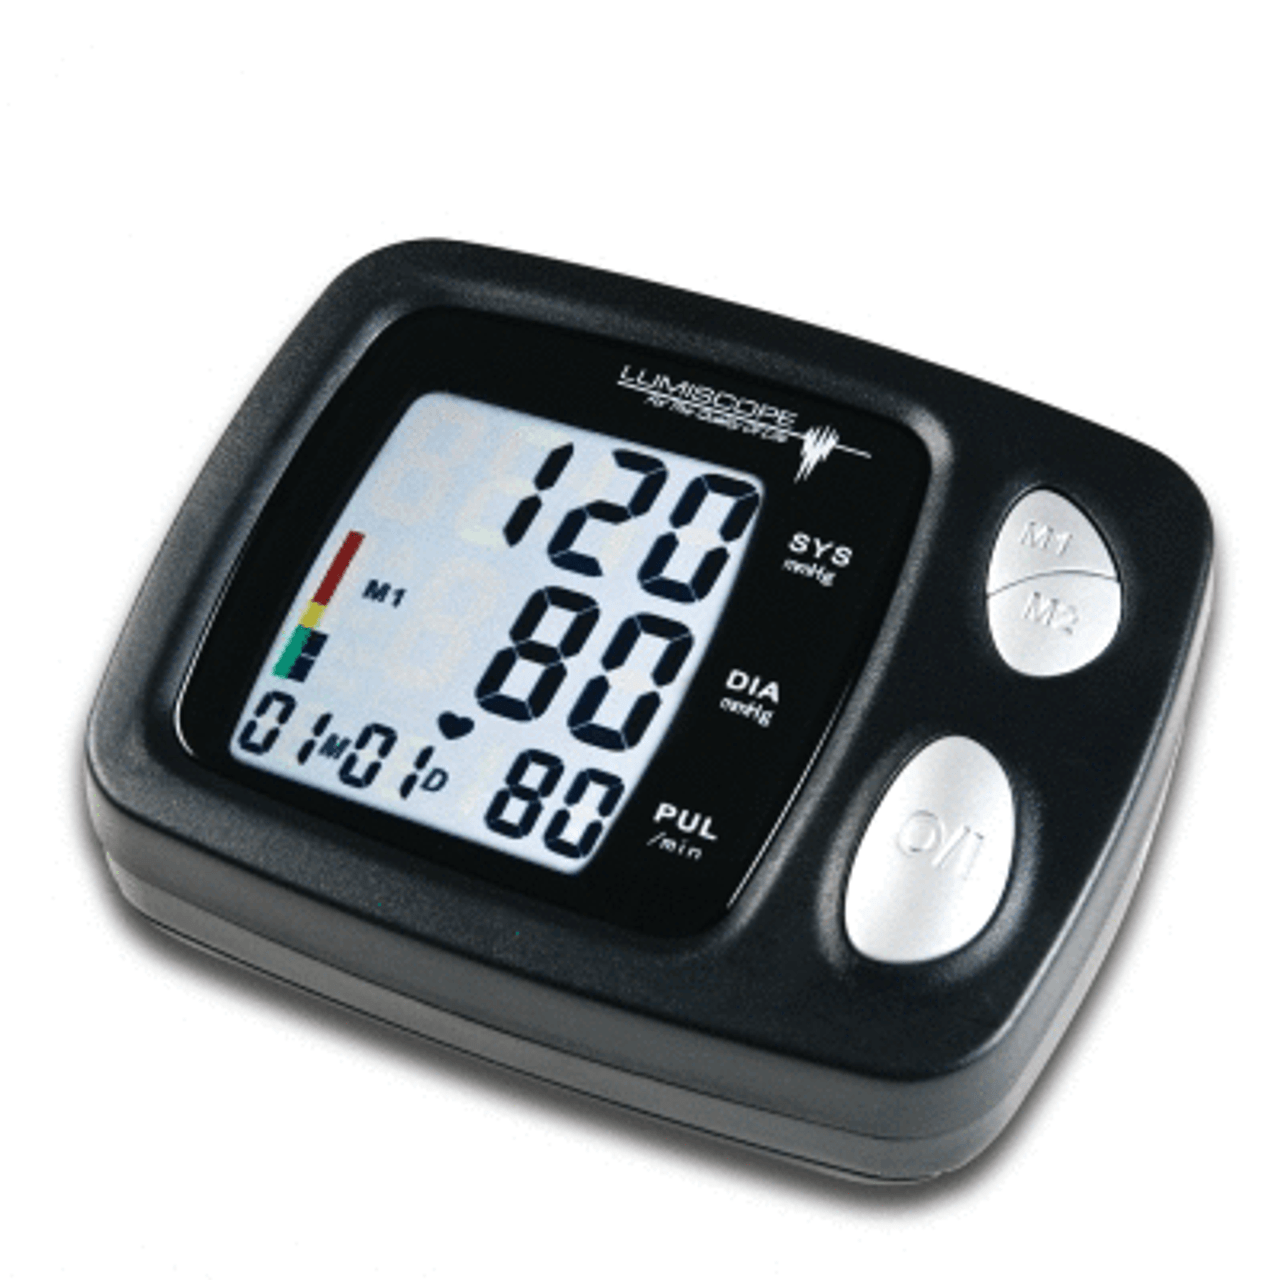 Graham Field Automatic Blood Pressure Monitor Lumiscope (1133)